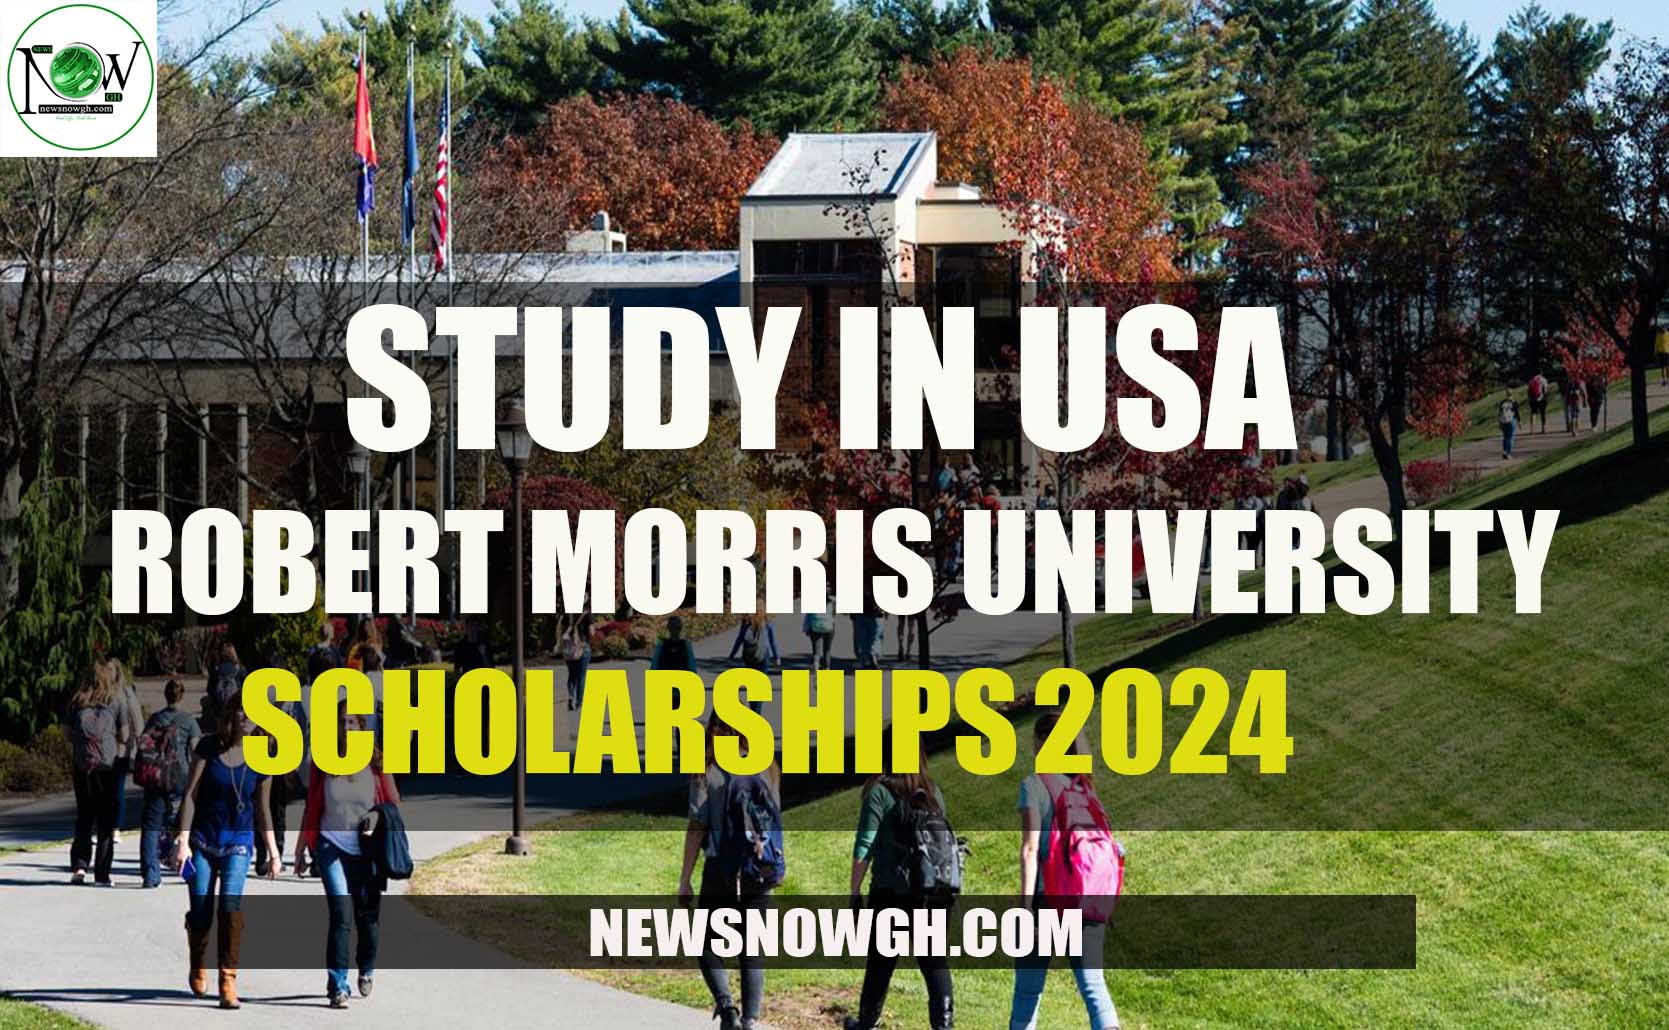 Robert Morris University Scholarship 